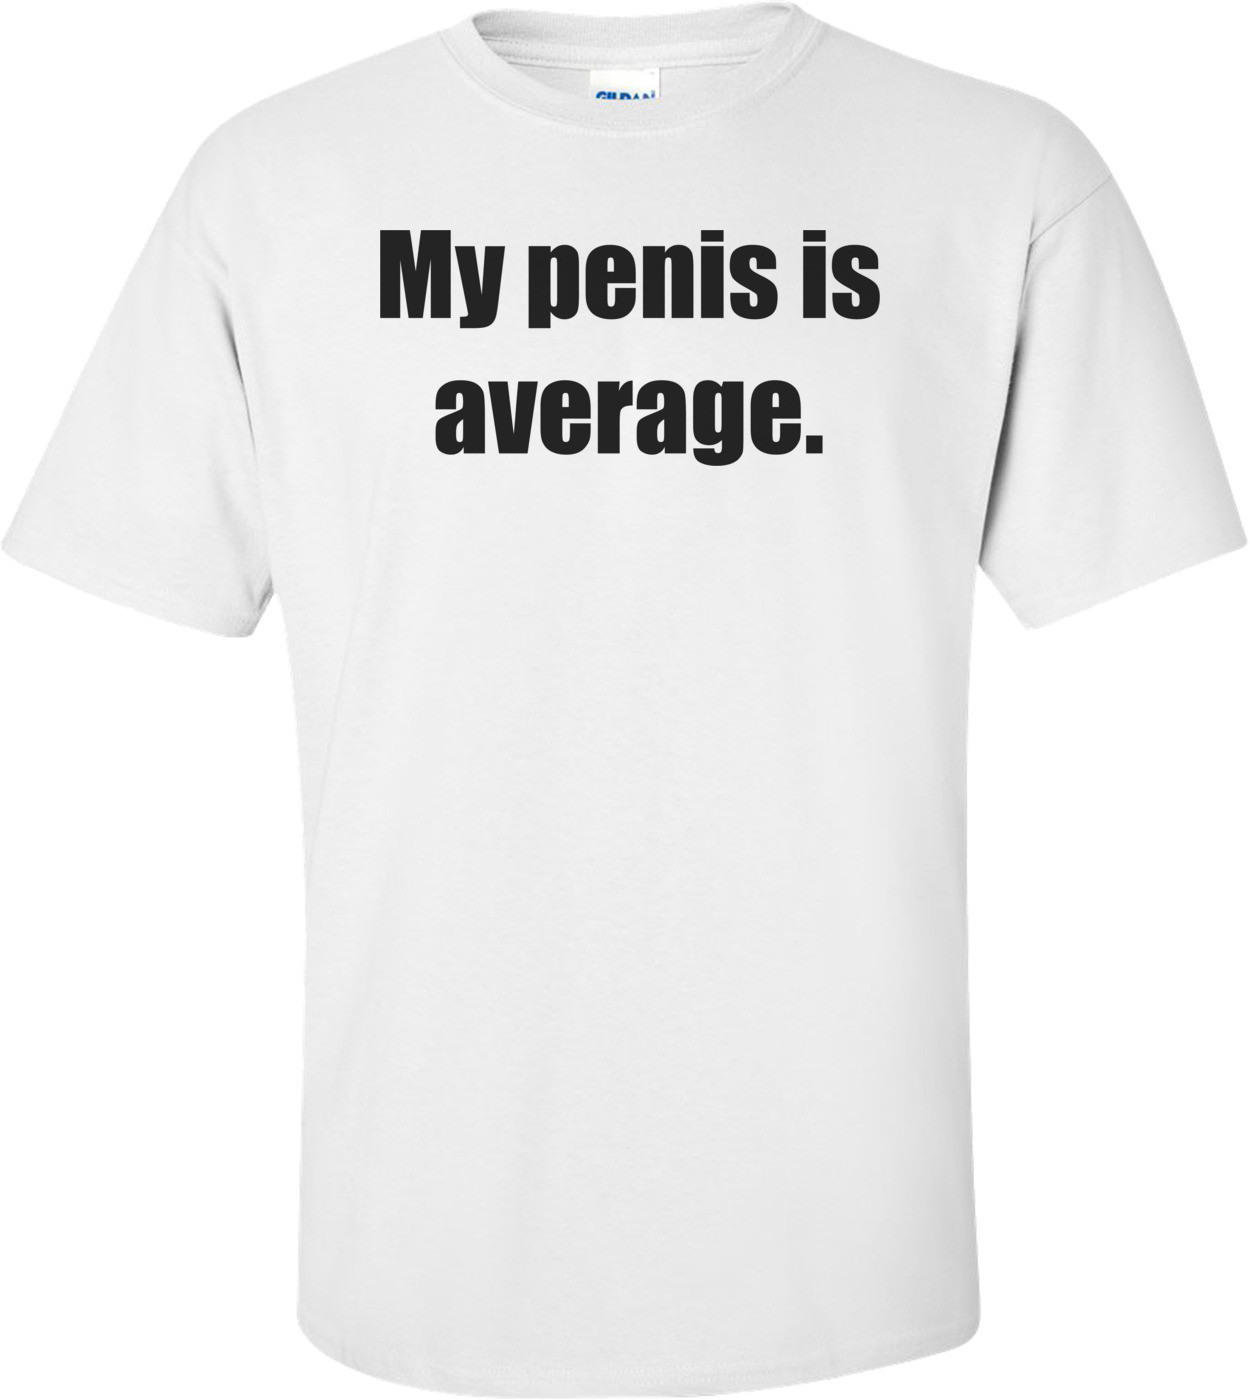 My penis is average.